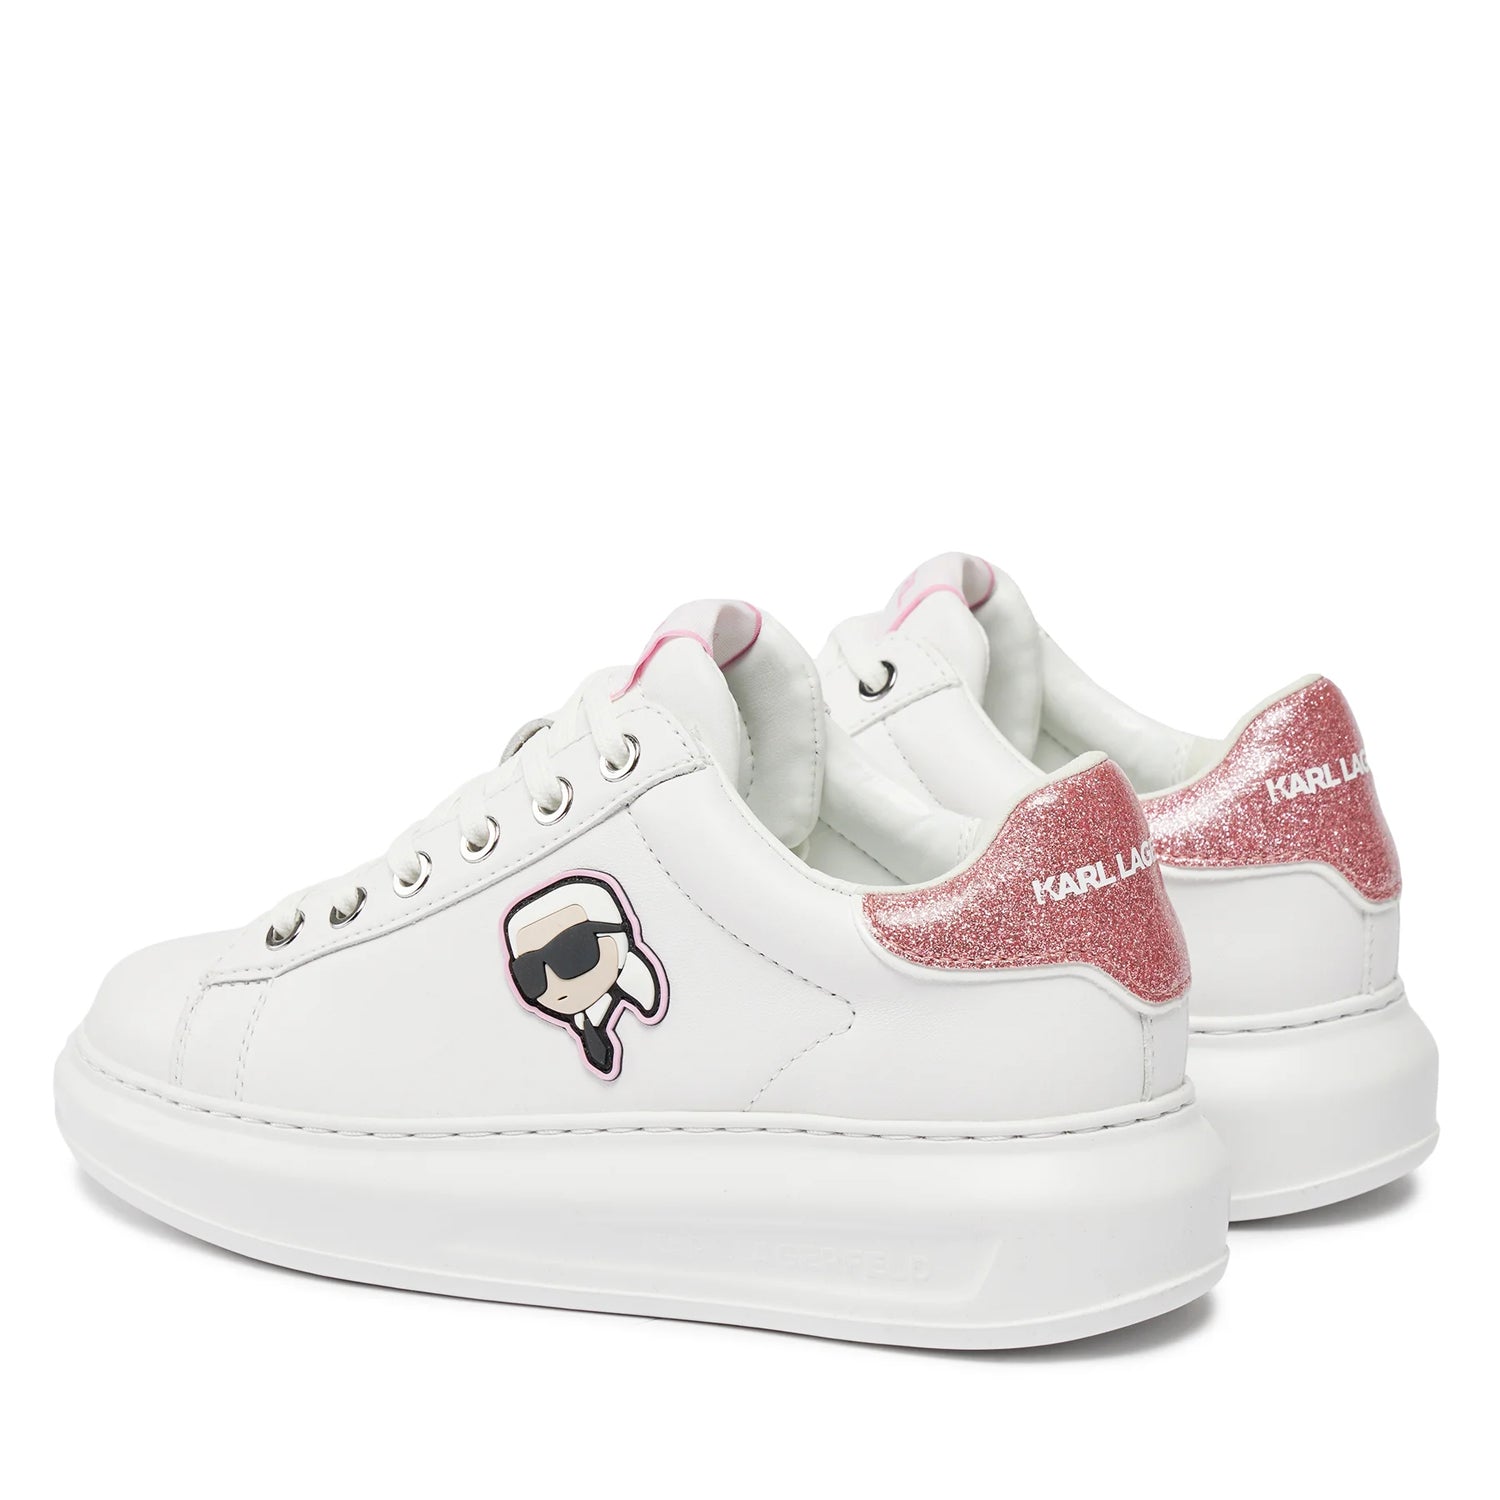 Karl Lagerfeld Sapatilhas Sneakers Shoes Kl62530n Whi Pink Branco Rosa_shot2